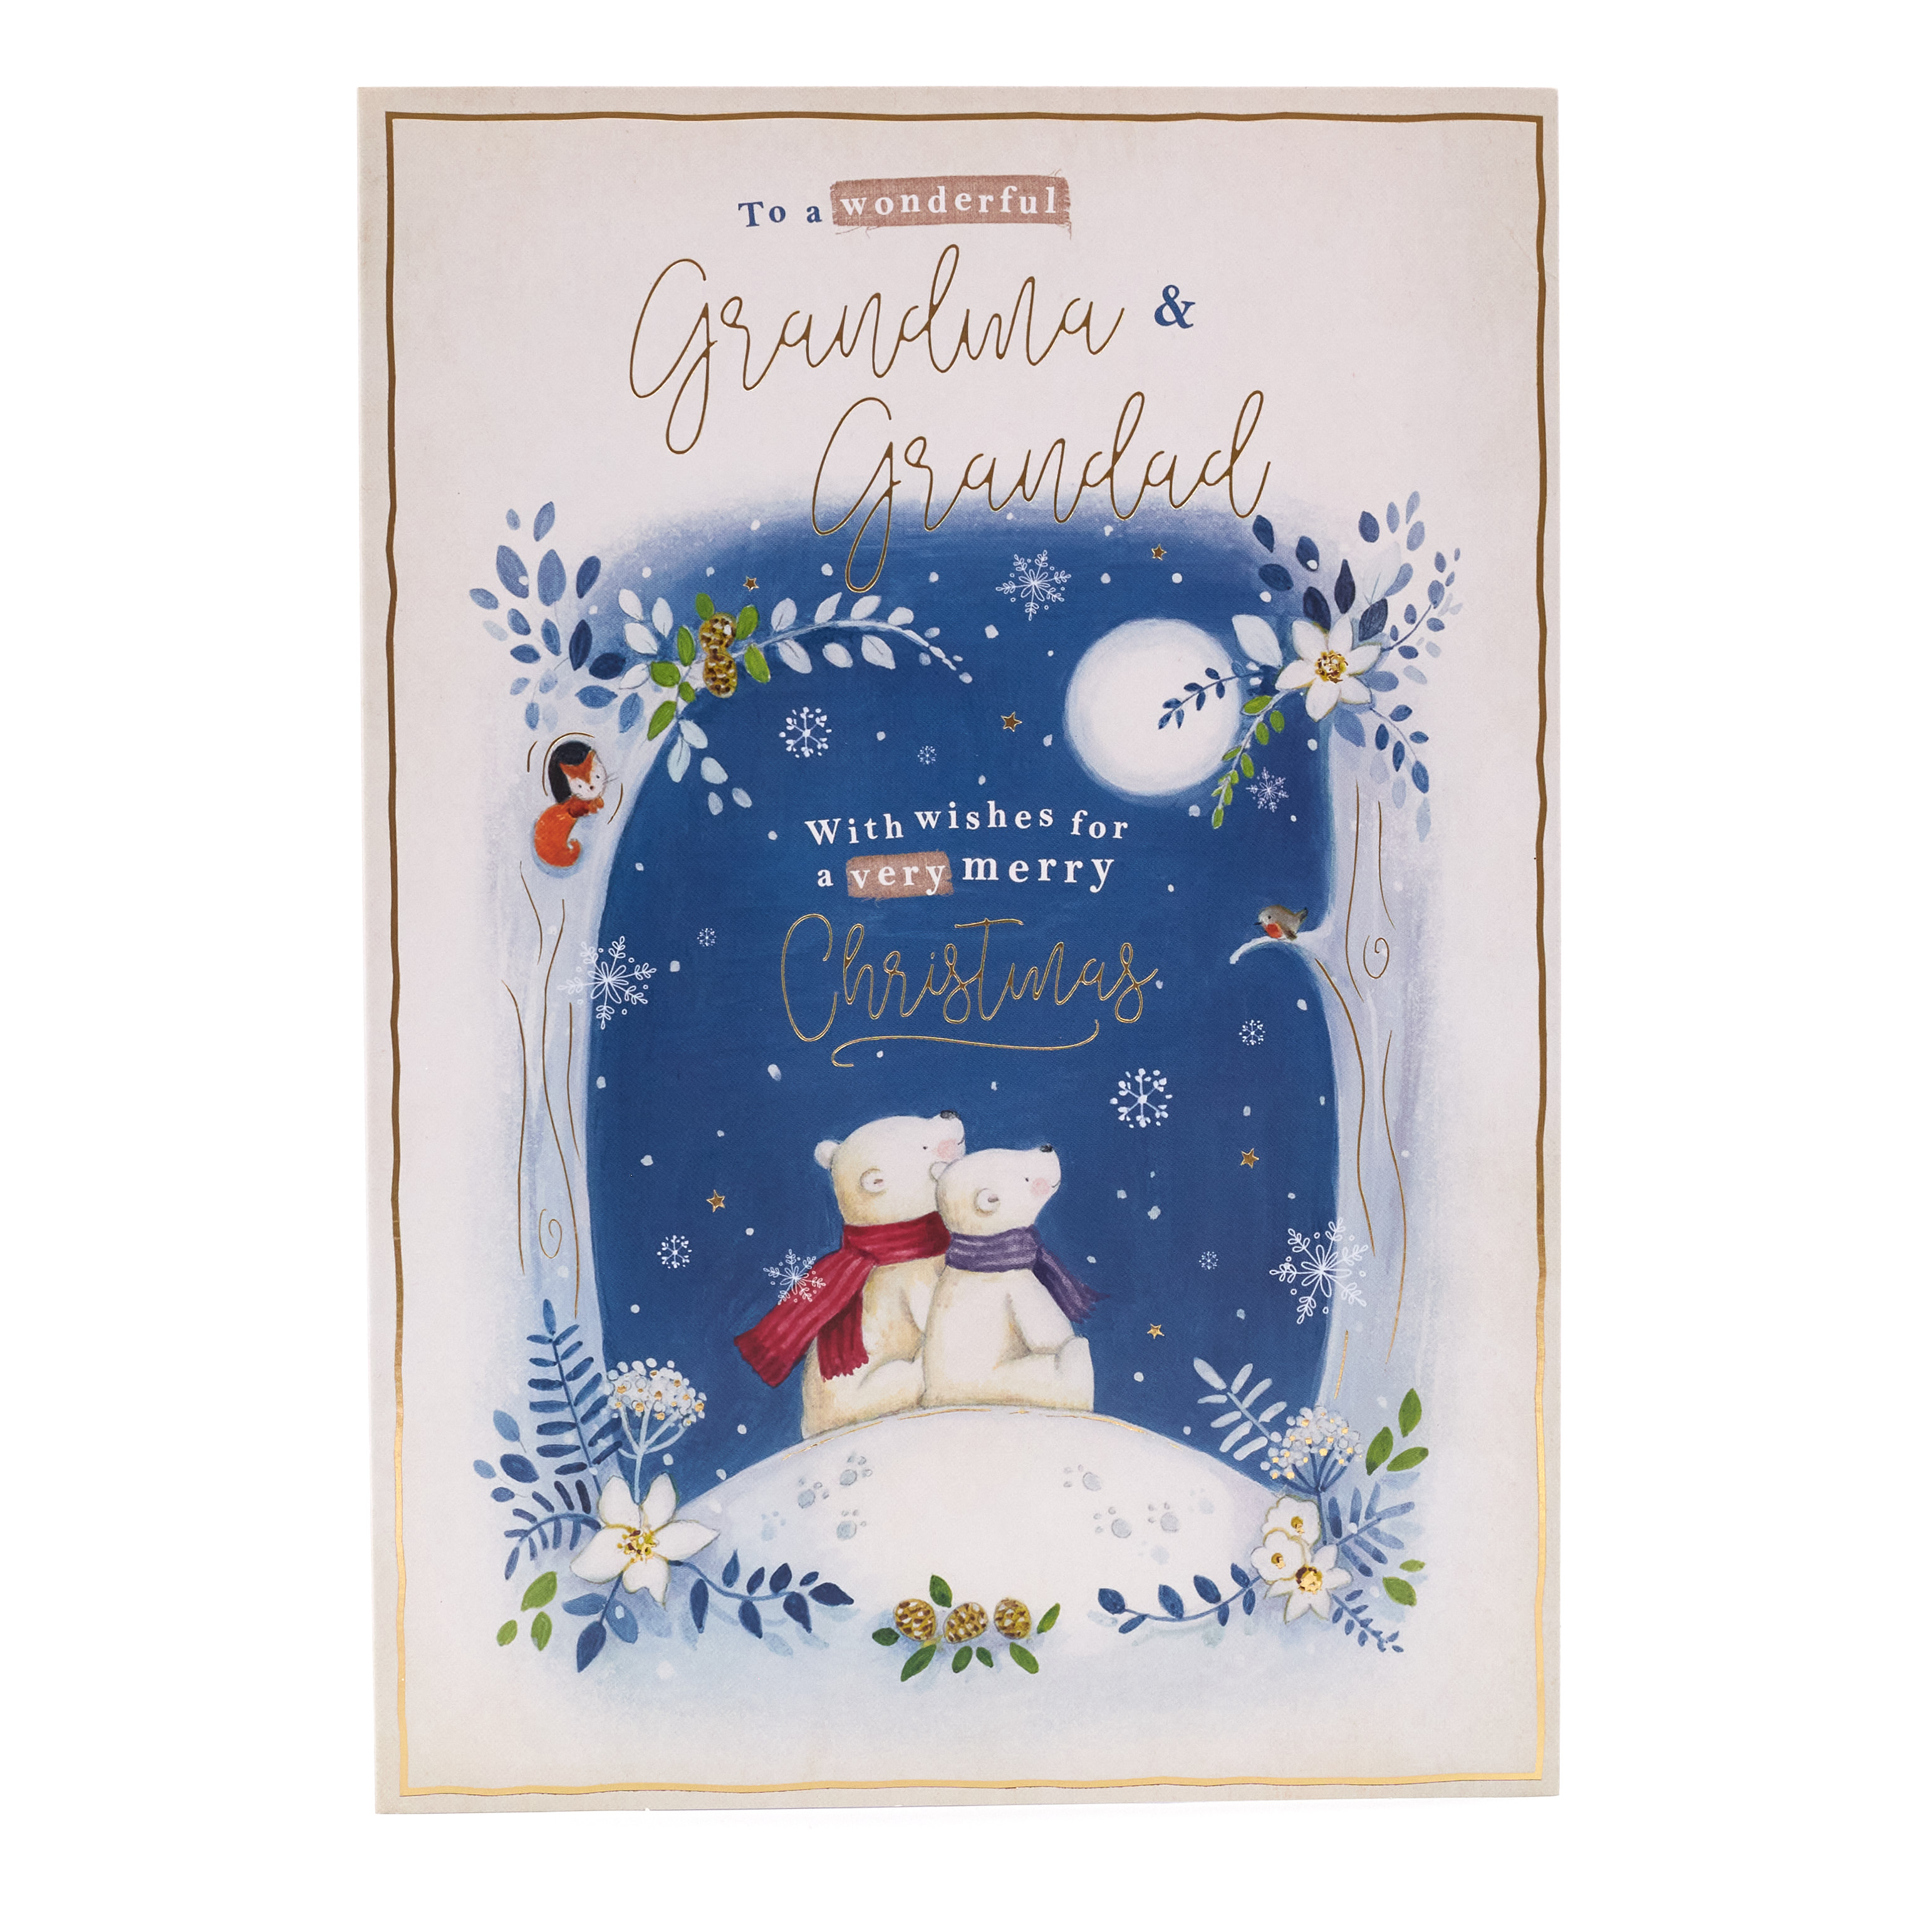 Christmas Card - Grandma And Grandad, Cute Woodland Bears